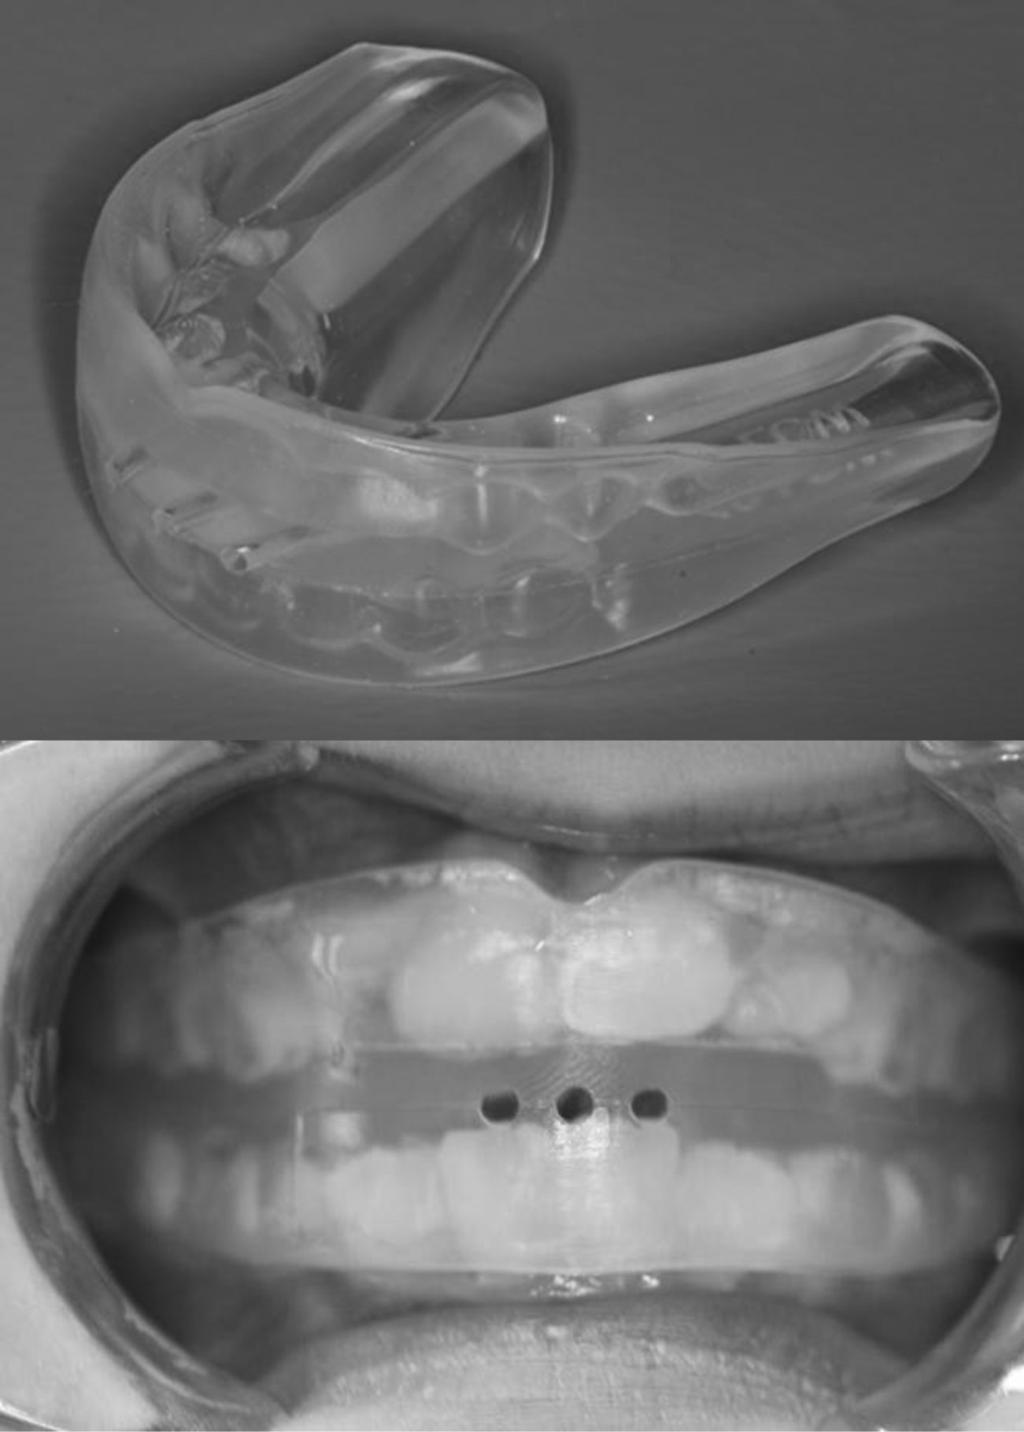 130 European Journal of Orthodontics, 2015, Vol. 37, No.